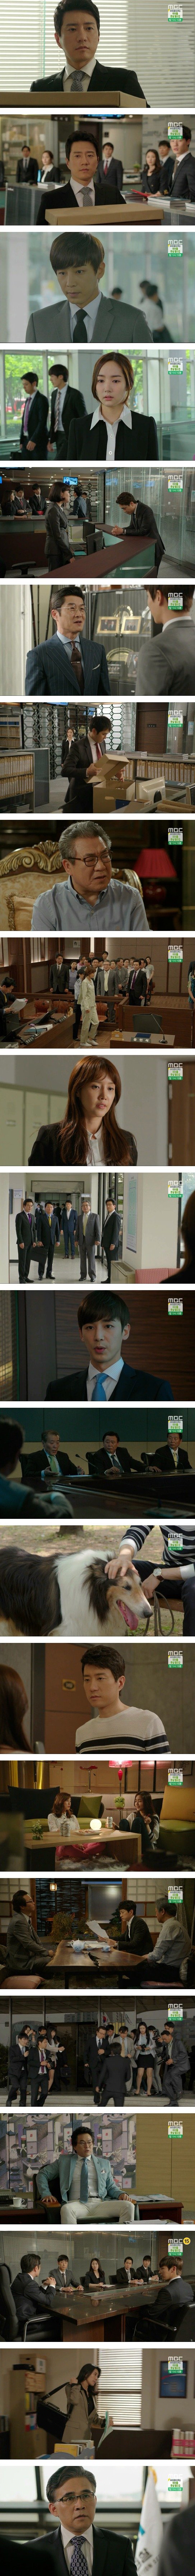 episode 12 captures for the Korean drama 'A New Leaf'